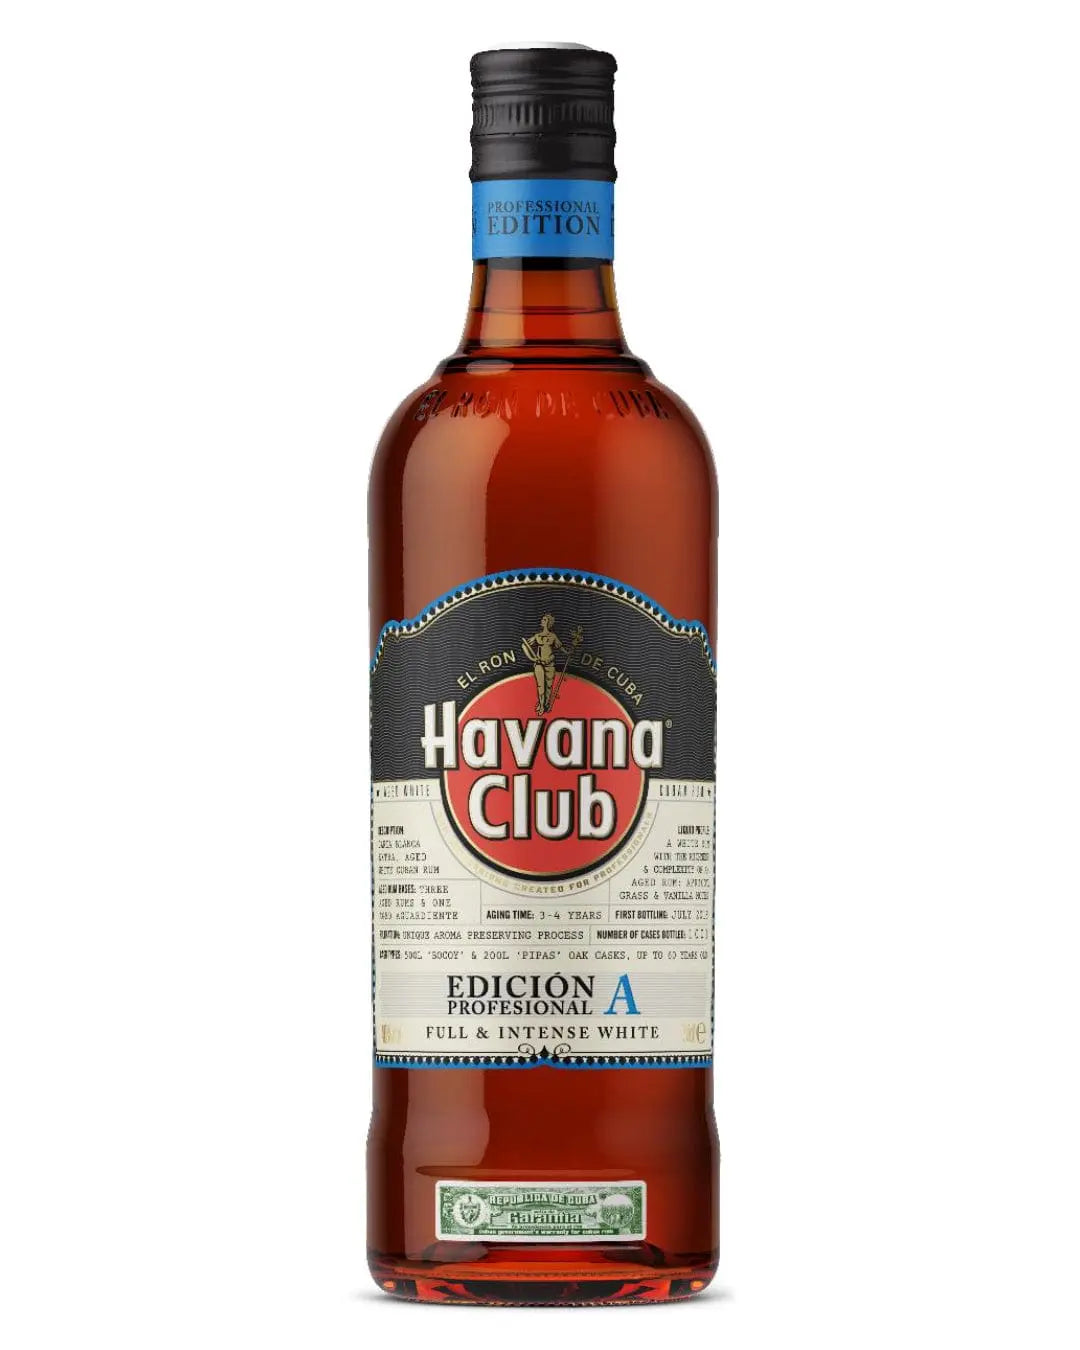 Havana Club Professional Edition A Rum, 70 cl Rum